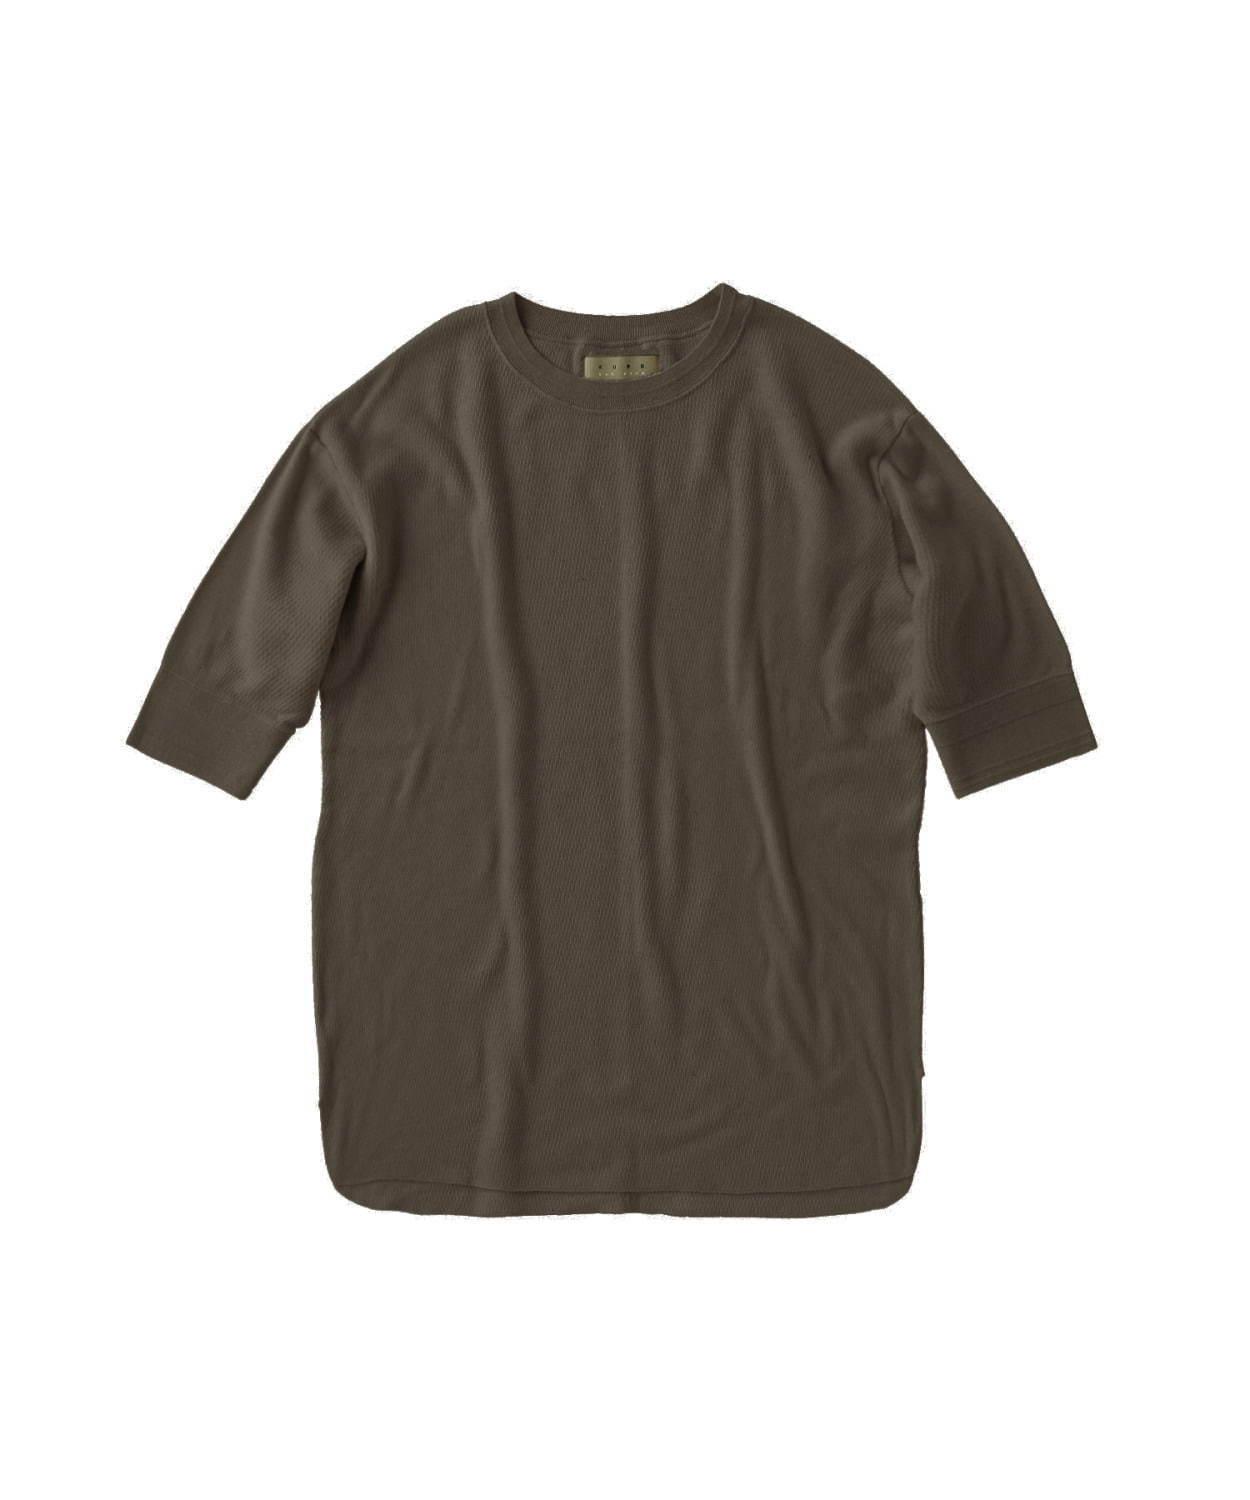  KURO“リメイク”デニムジャケットやパンツ、オーガニックコットンのシャツやワンピースも コピー